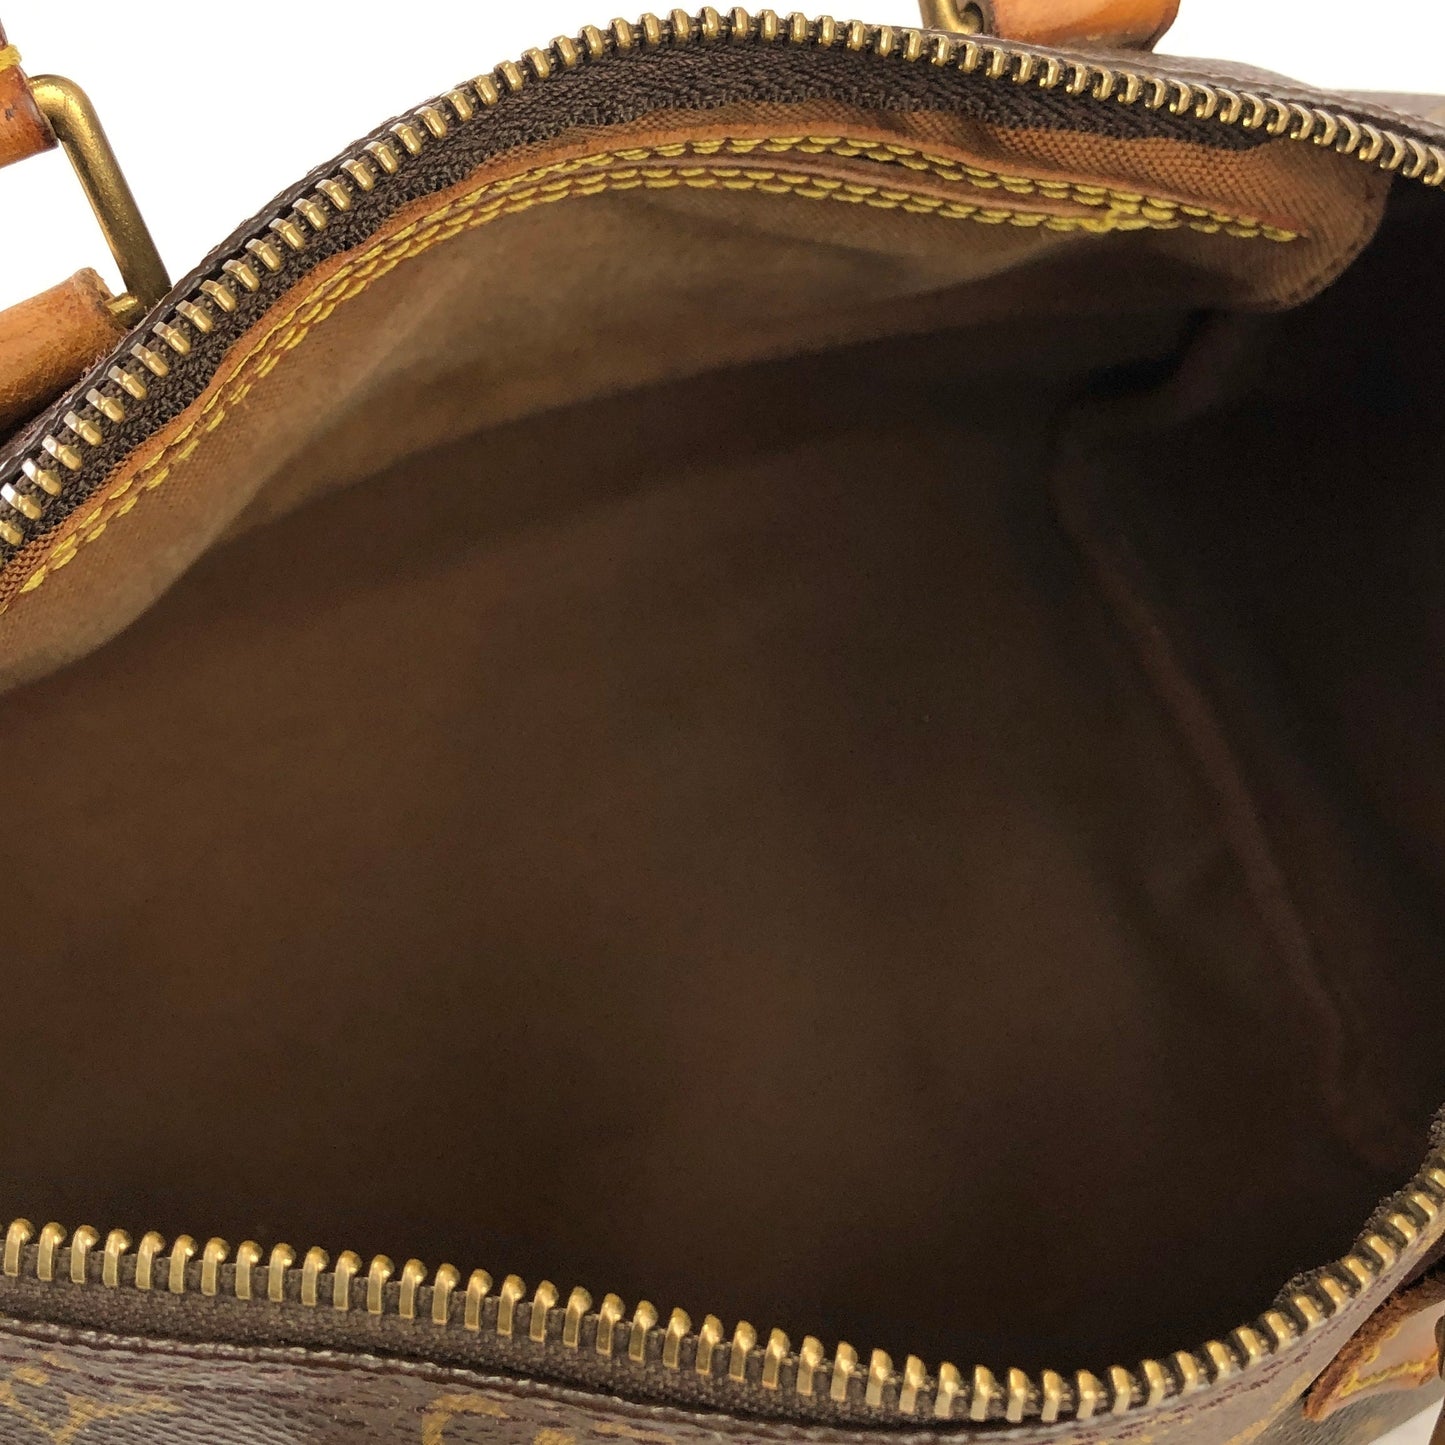 LOUIS VUITTON Monogram Speedy 25 M41528 Mini Bostonbag Handbag Brown Vintage Old u67ry3